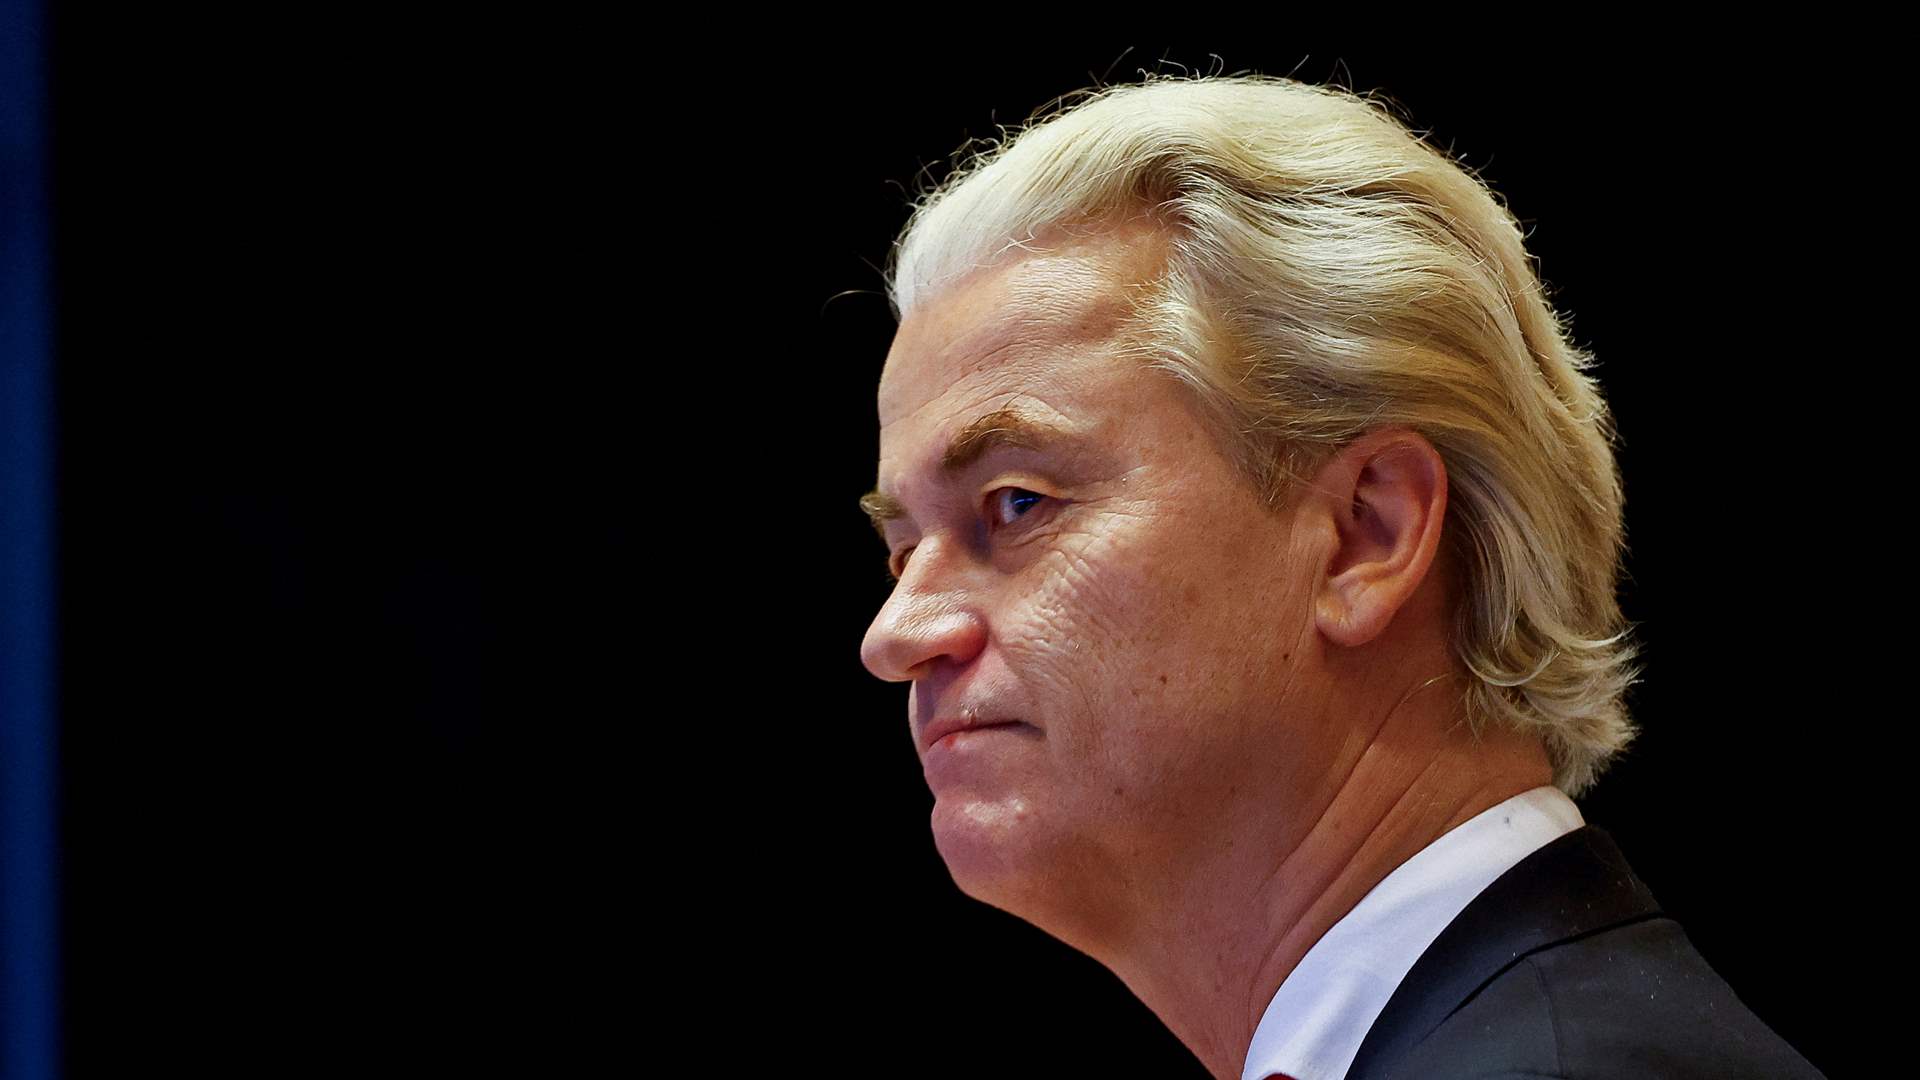 Dutch election winner Wilders meets Israeli president, pledges support